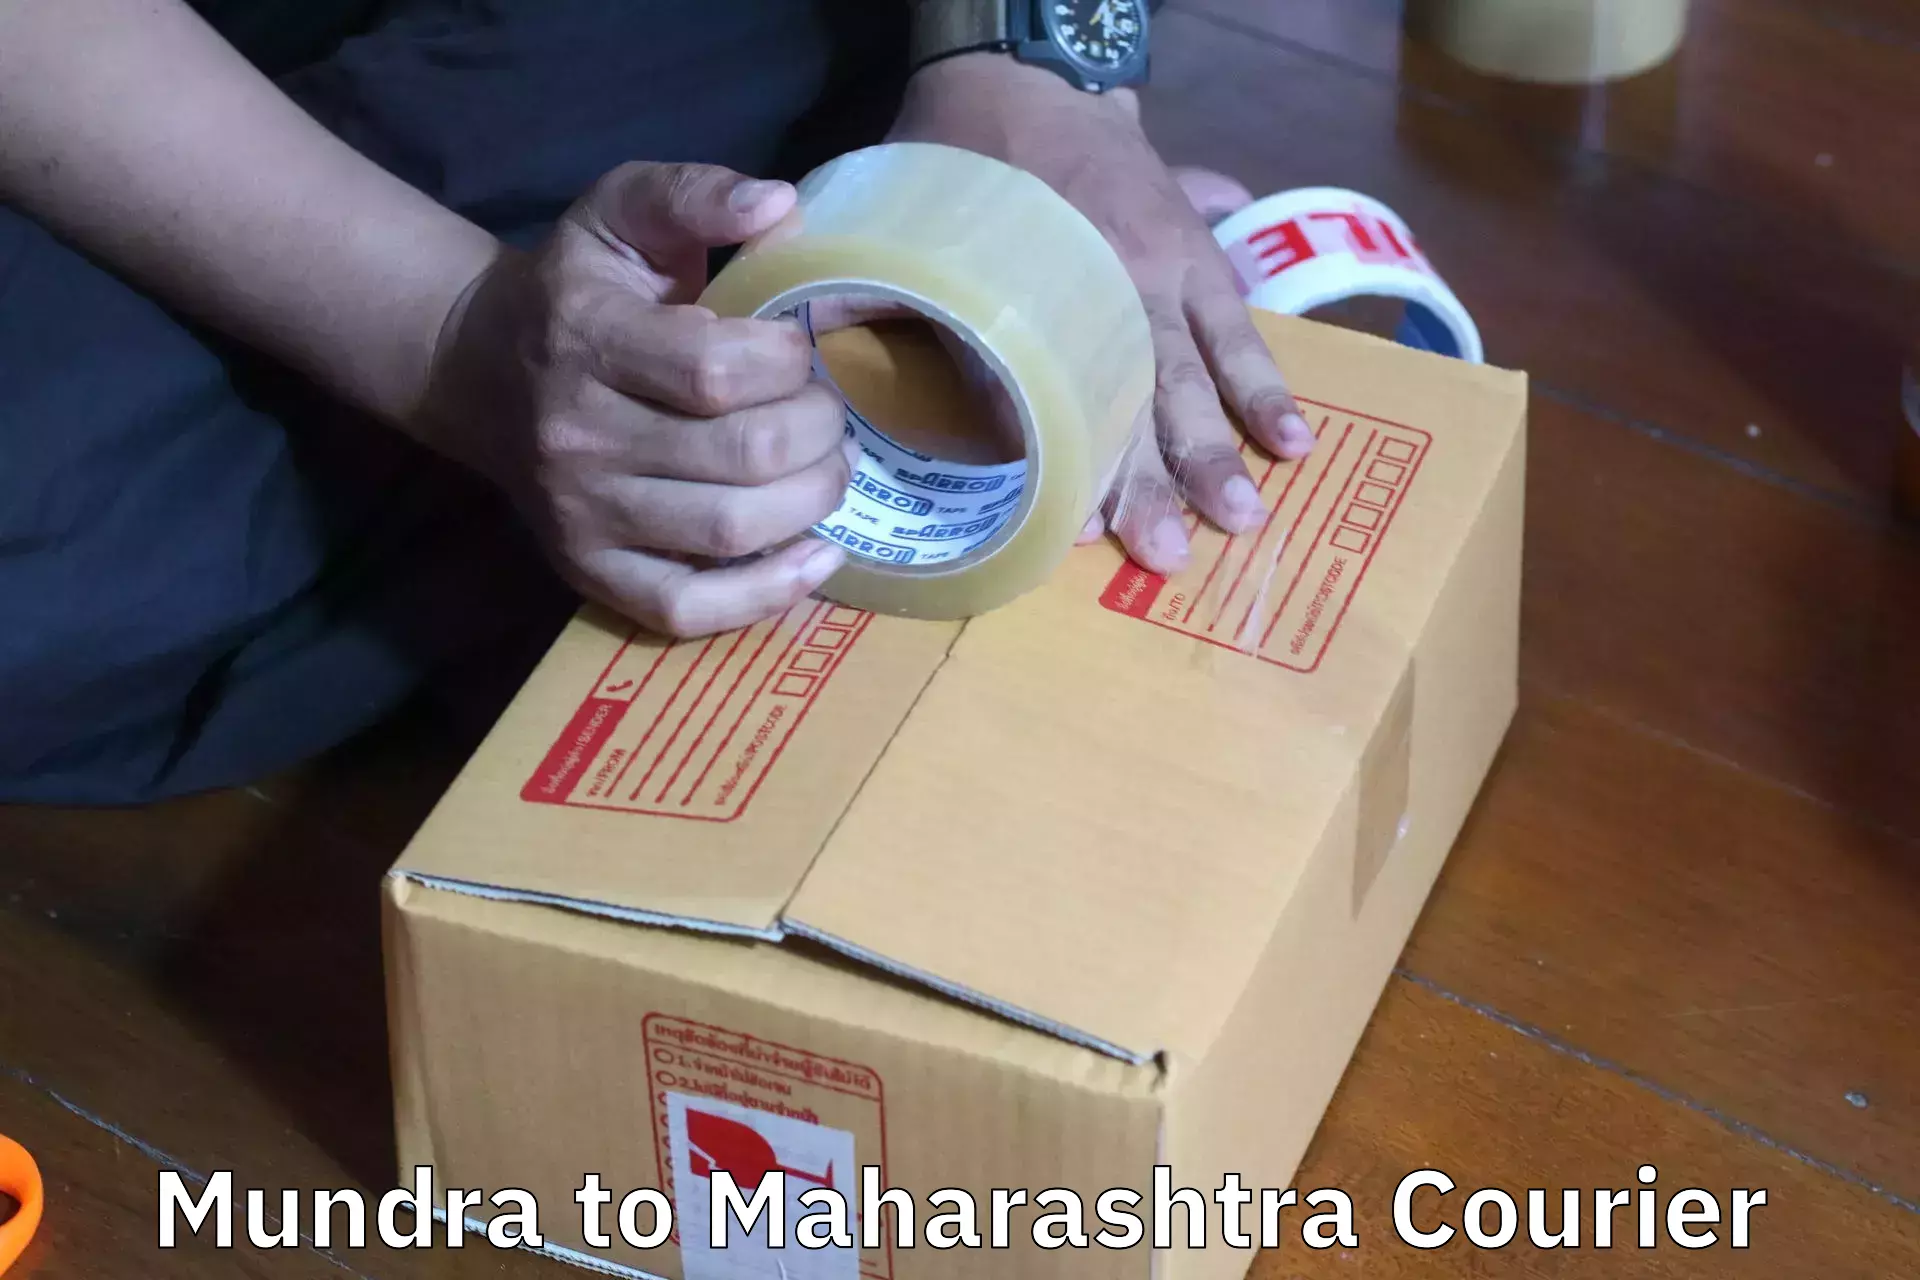 Furniture relocation experts Mundra to Maharashtra